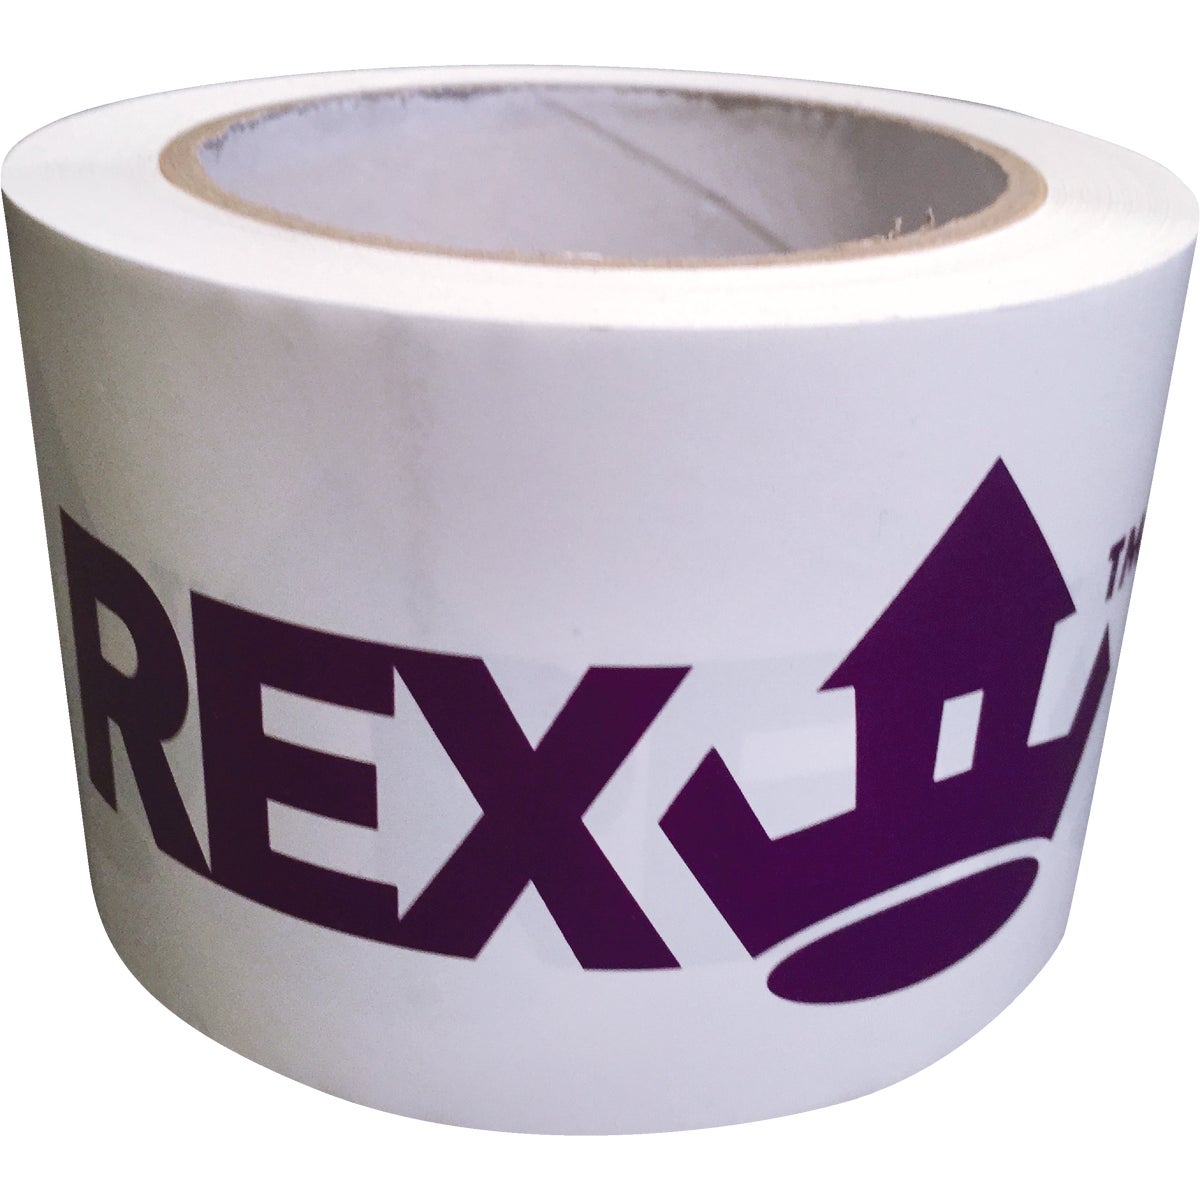 REX Bluebond Seaming Tape